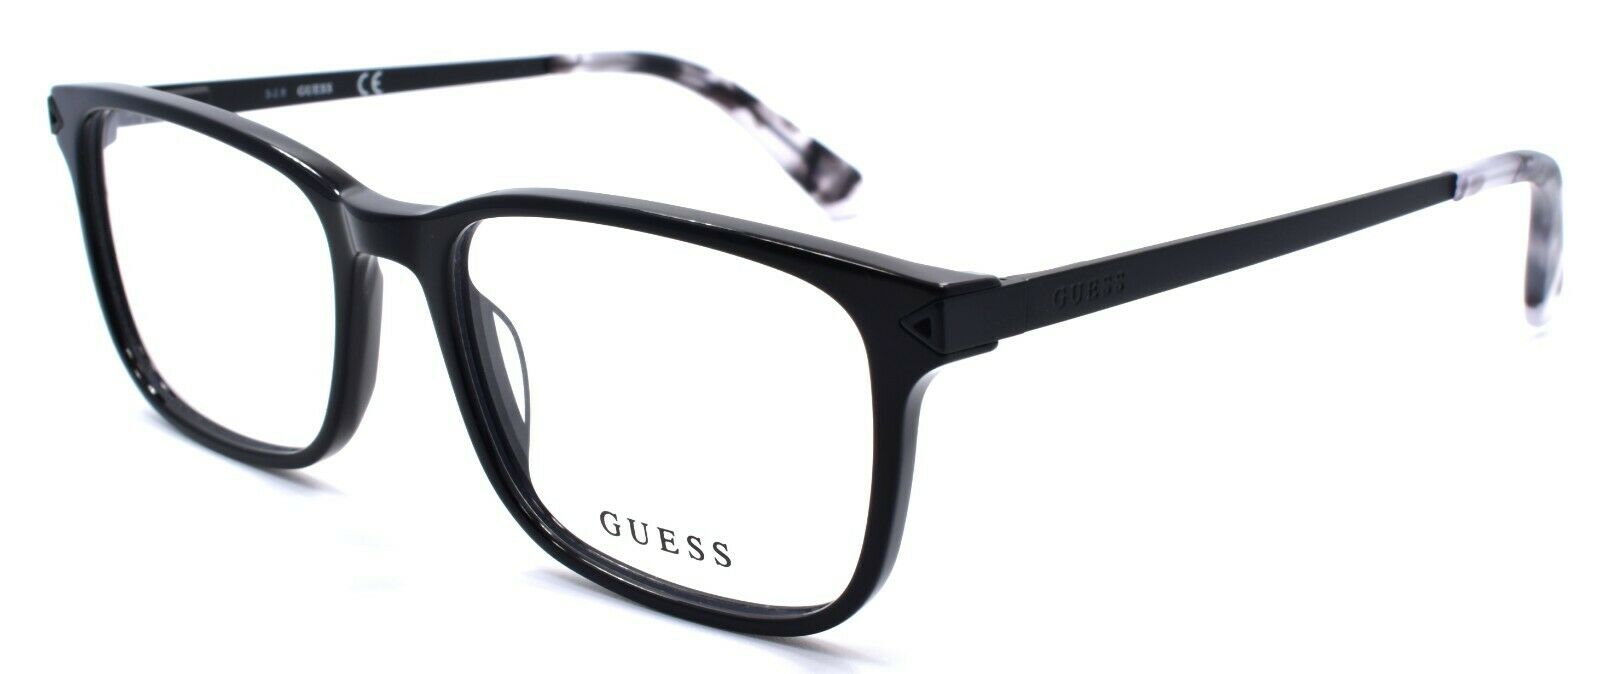 1-GUESS GU1963 005 Men's Eyeglasses Frames 52-17-145 Black-889214012517-IKSpecs